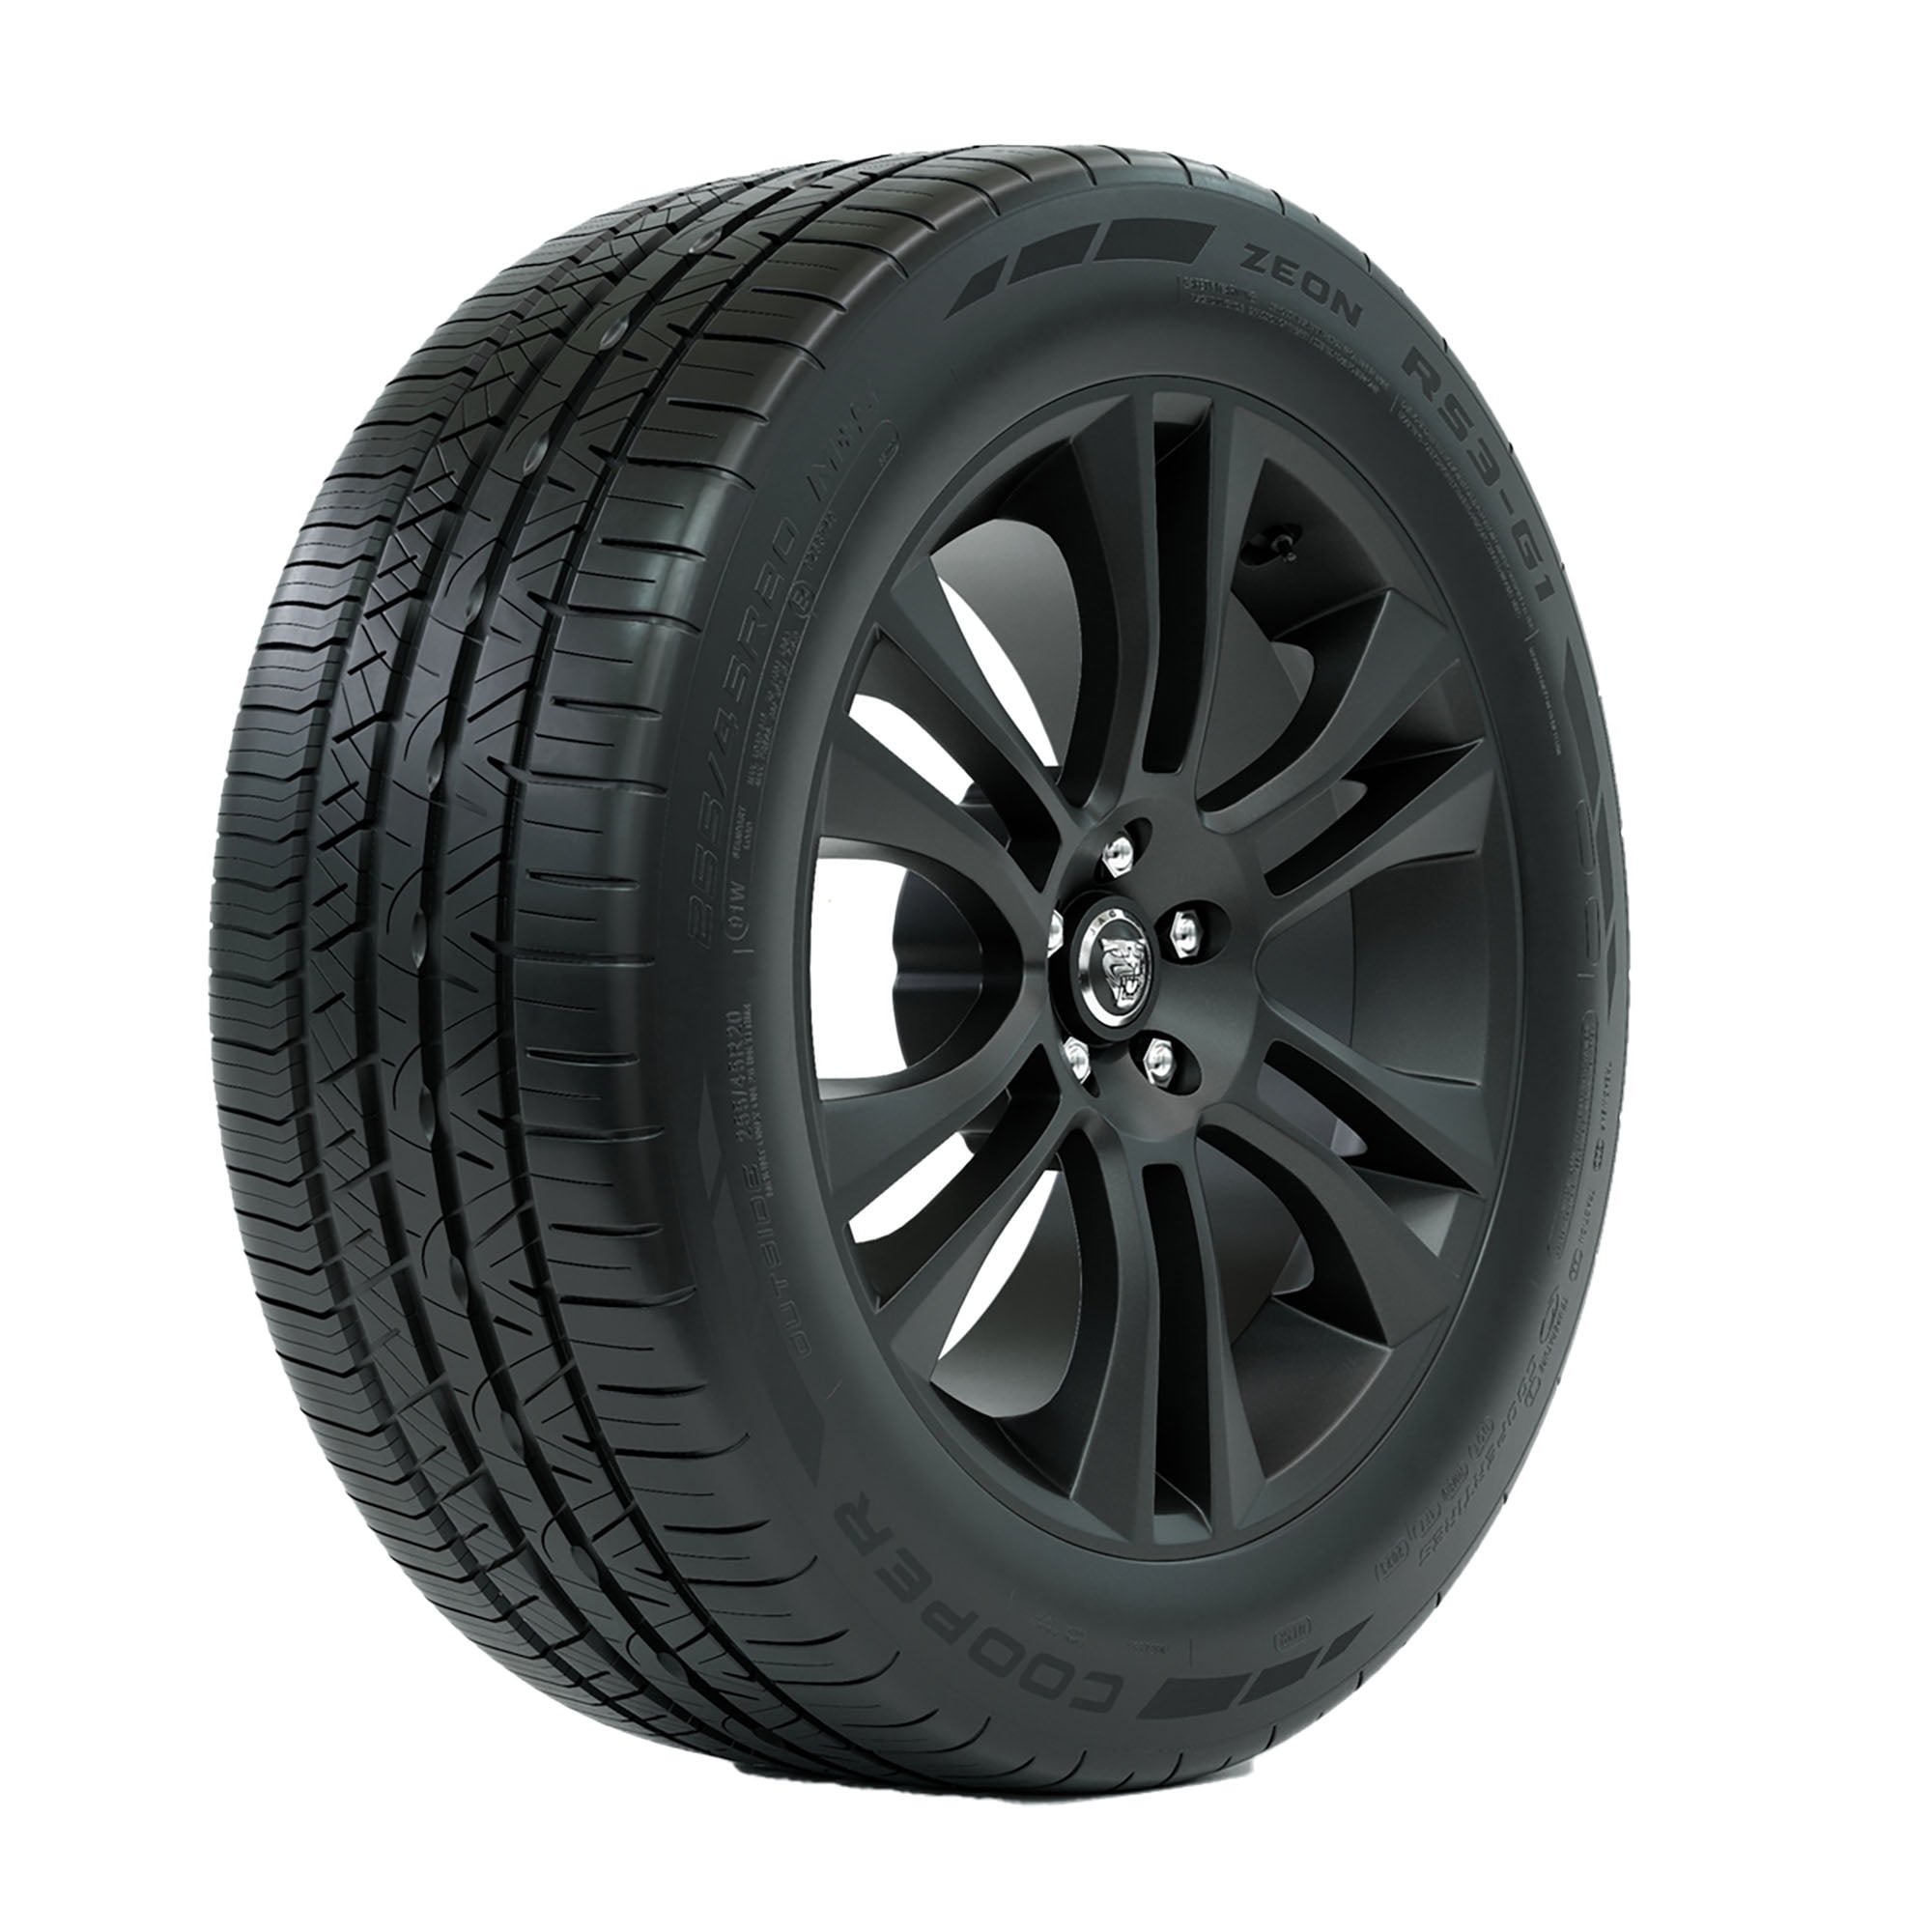 Cooper Zeon RS3-G1 All Season 215/45R18 93W XL Passenger Tire